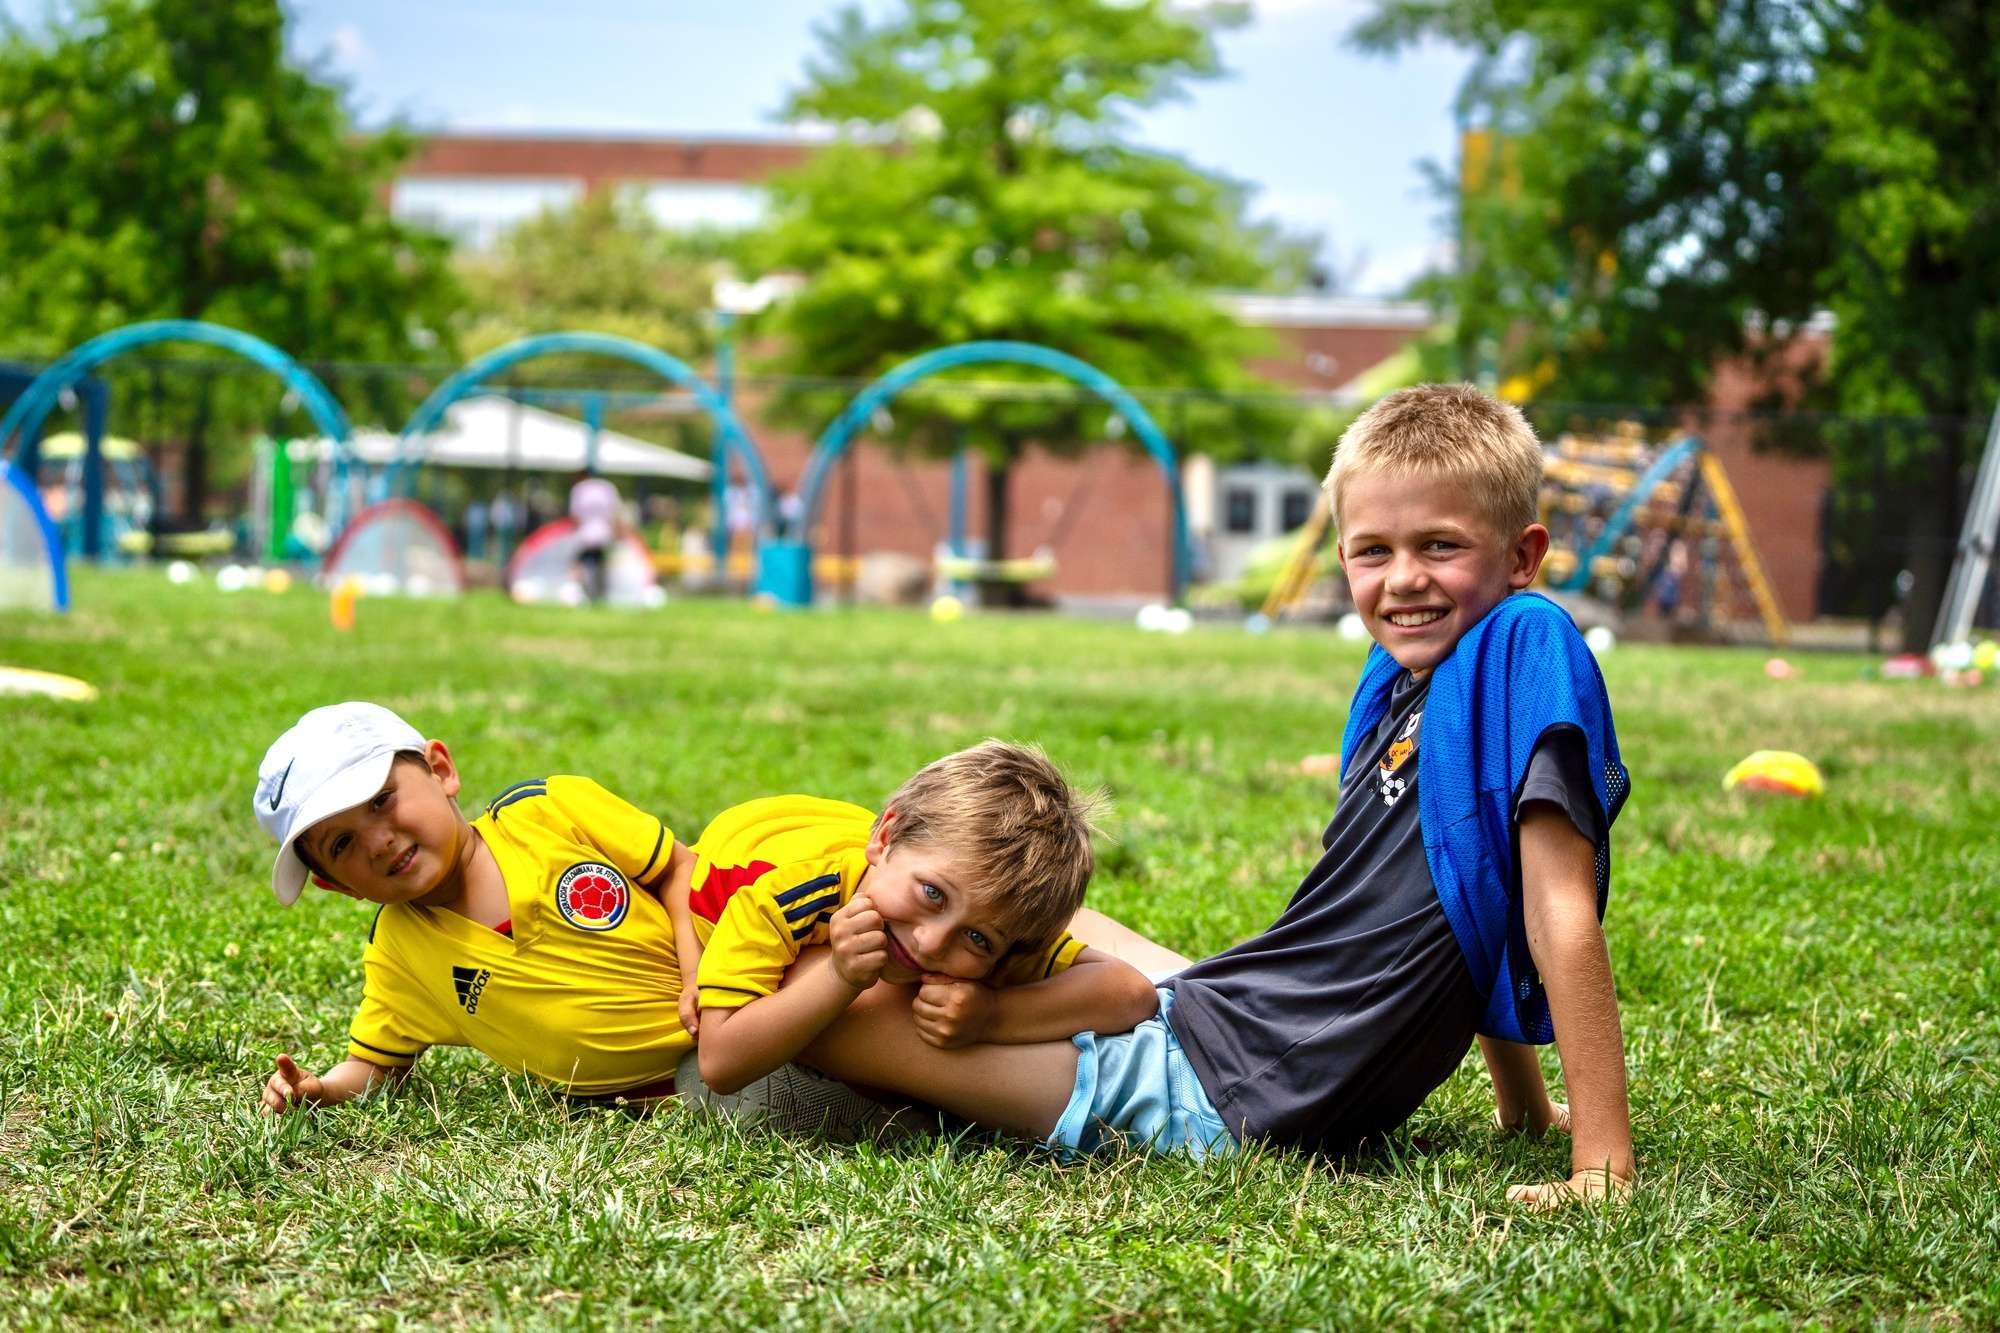 Dc-way-soccer-club-for-kids-in-washington-dc-summer-camp-at-tyler-elementary-school- 0099.jpg